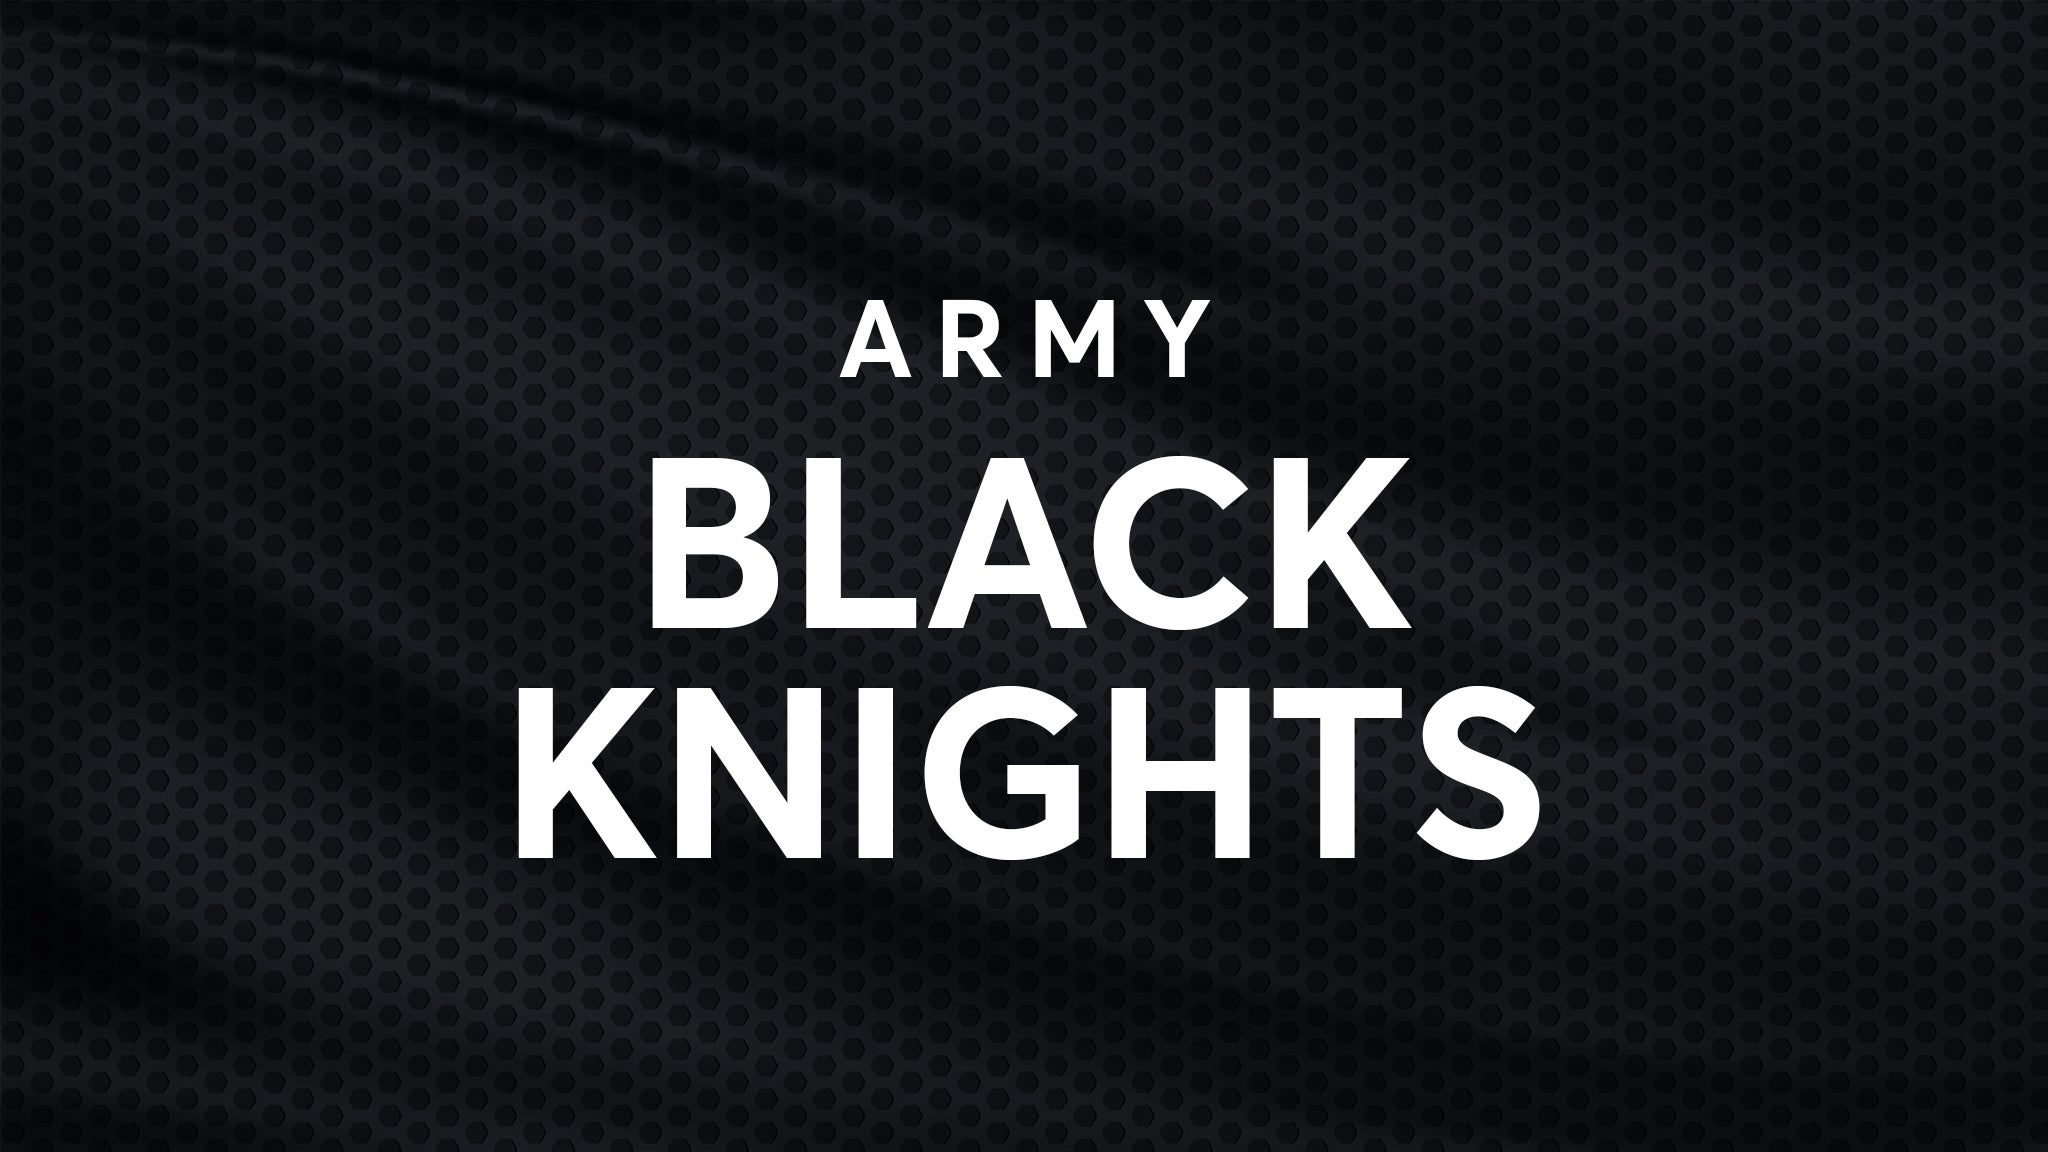 Army Black Knights Football vs. Rice Owls Football